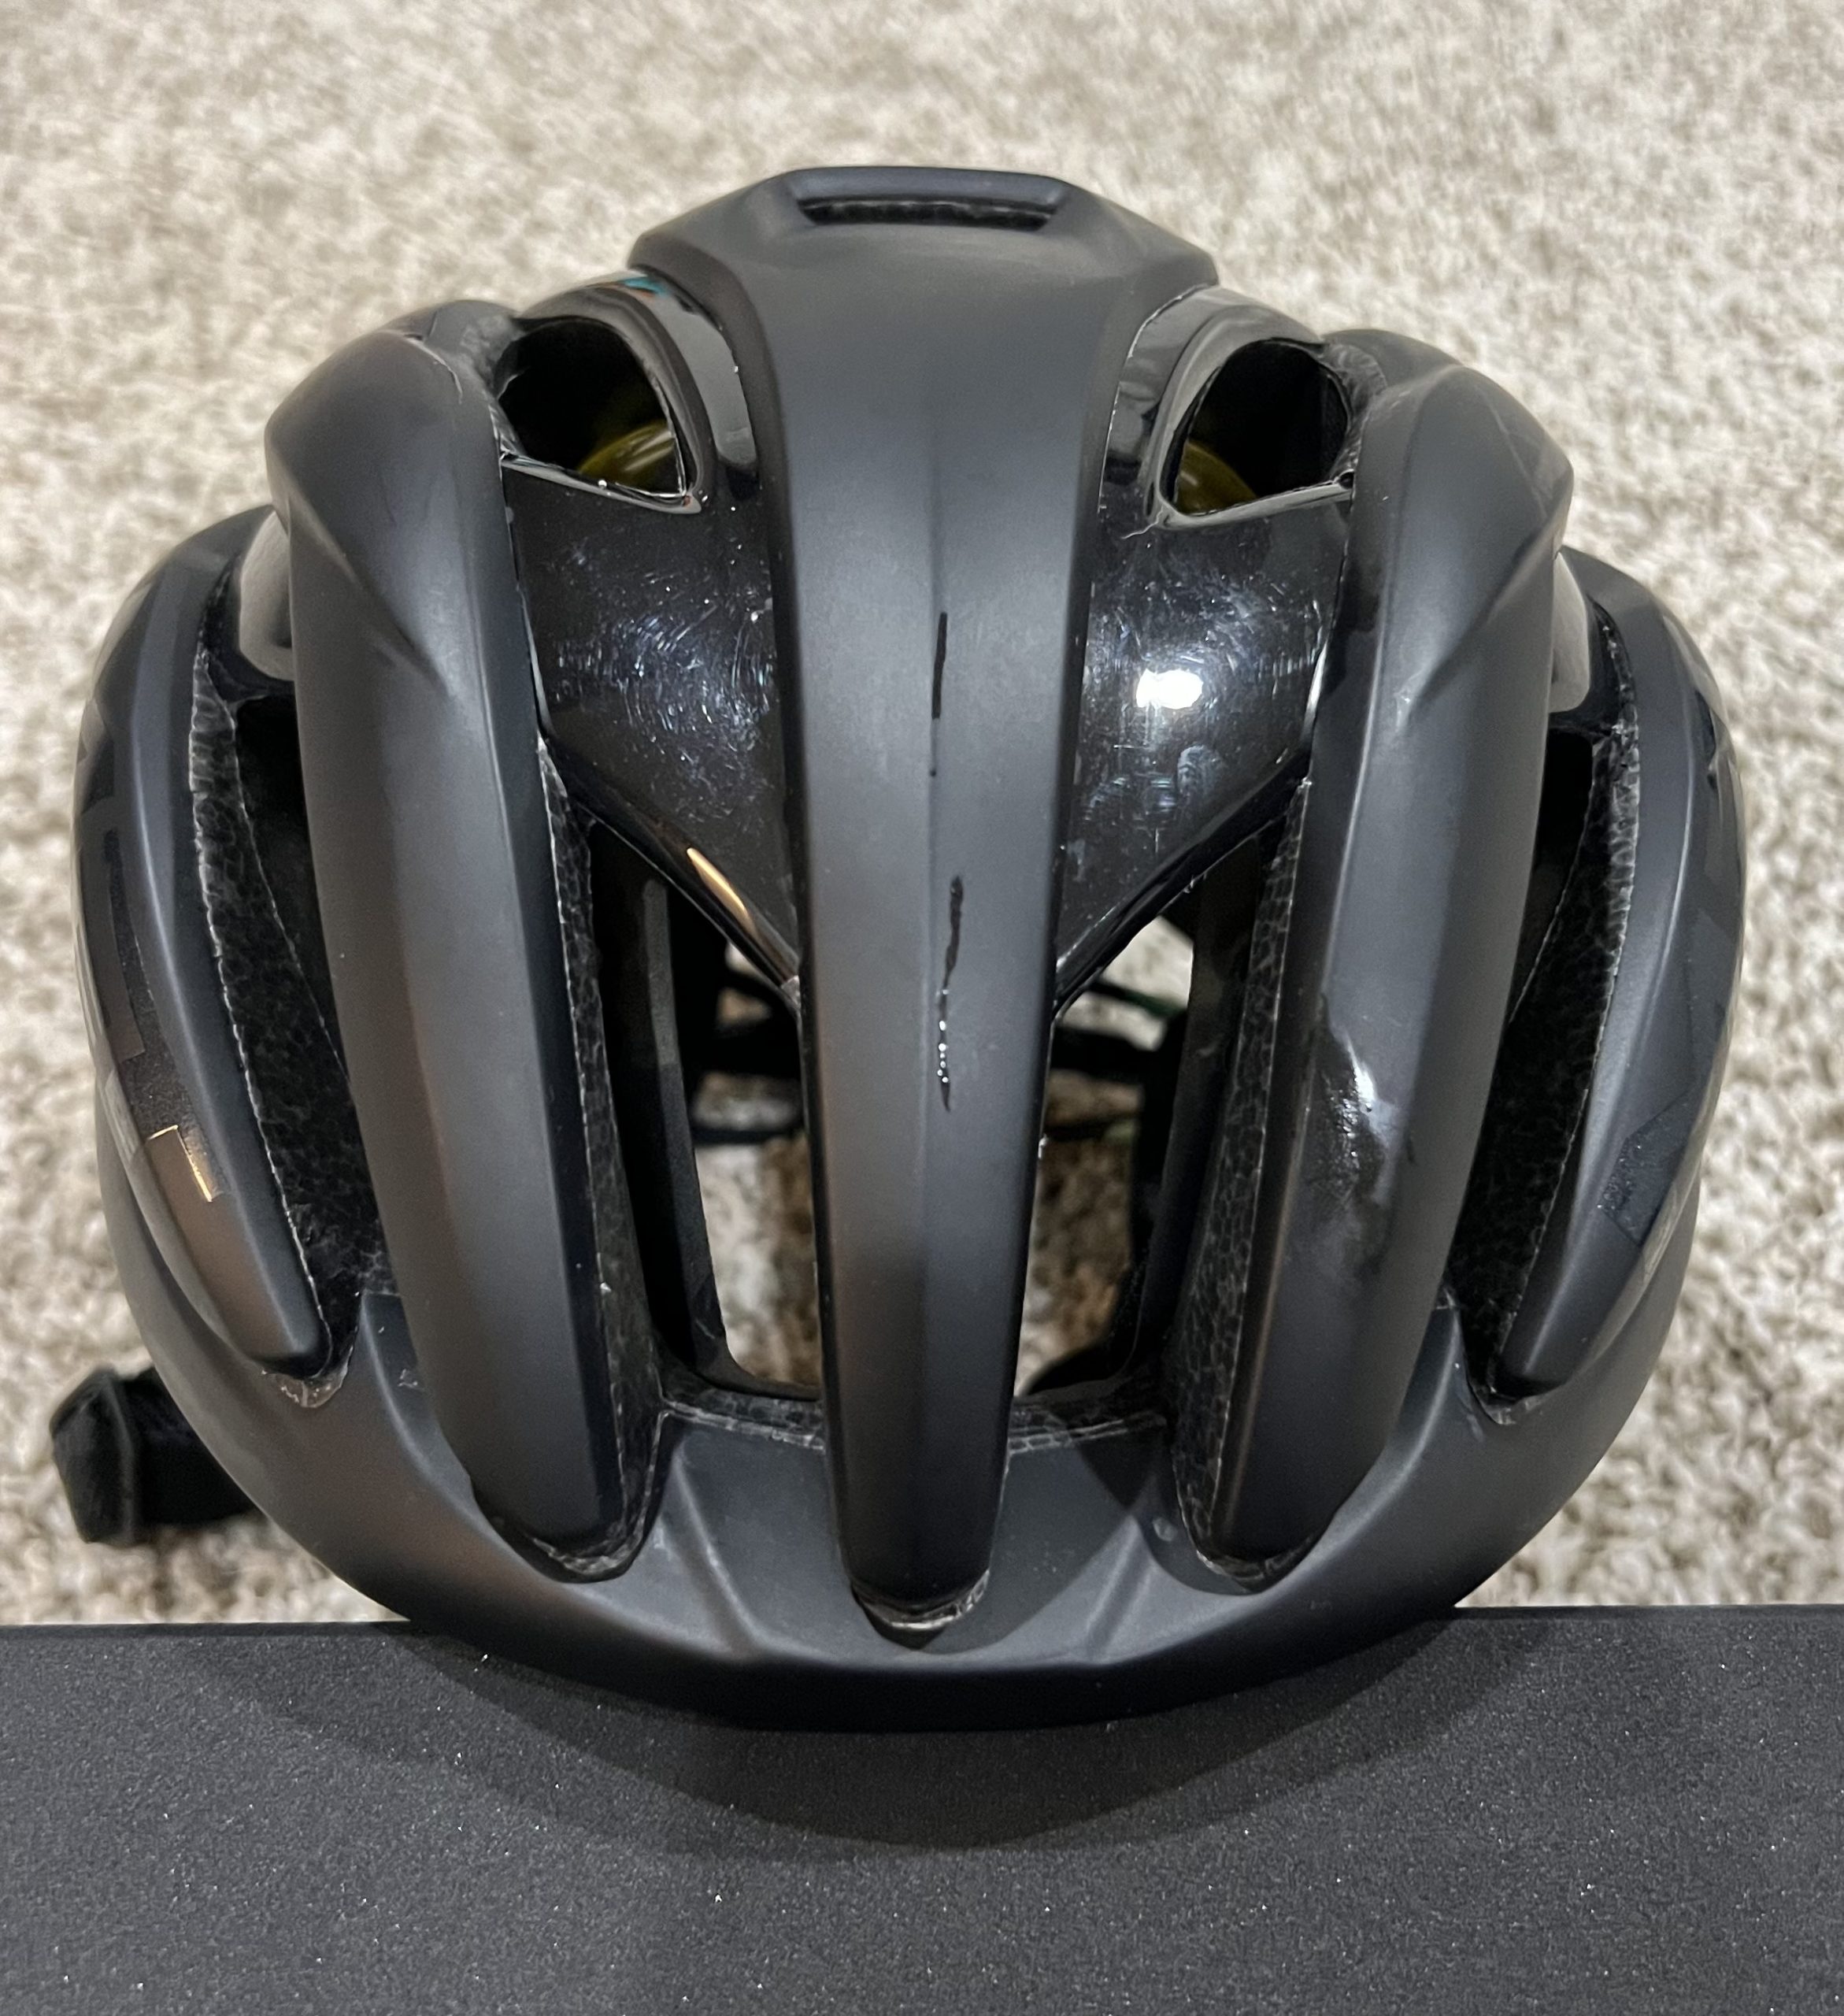 MET Trenta MIPS Helmet - Black/Matt Glossy, S